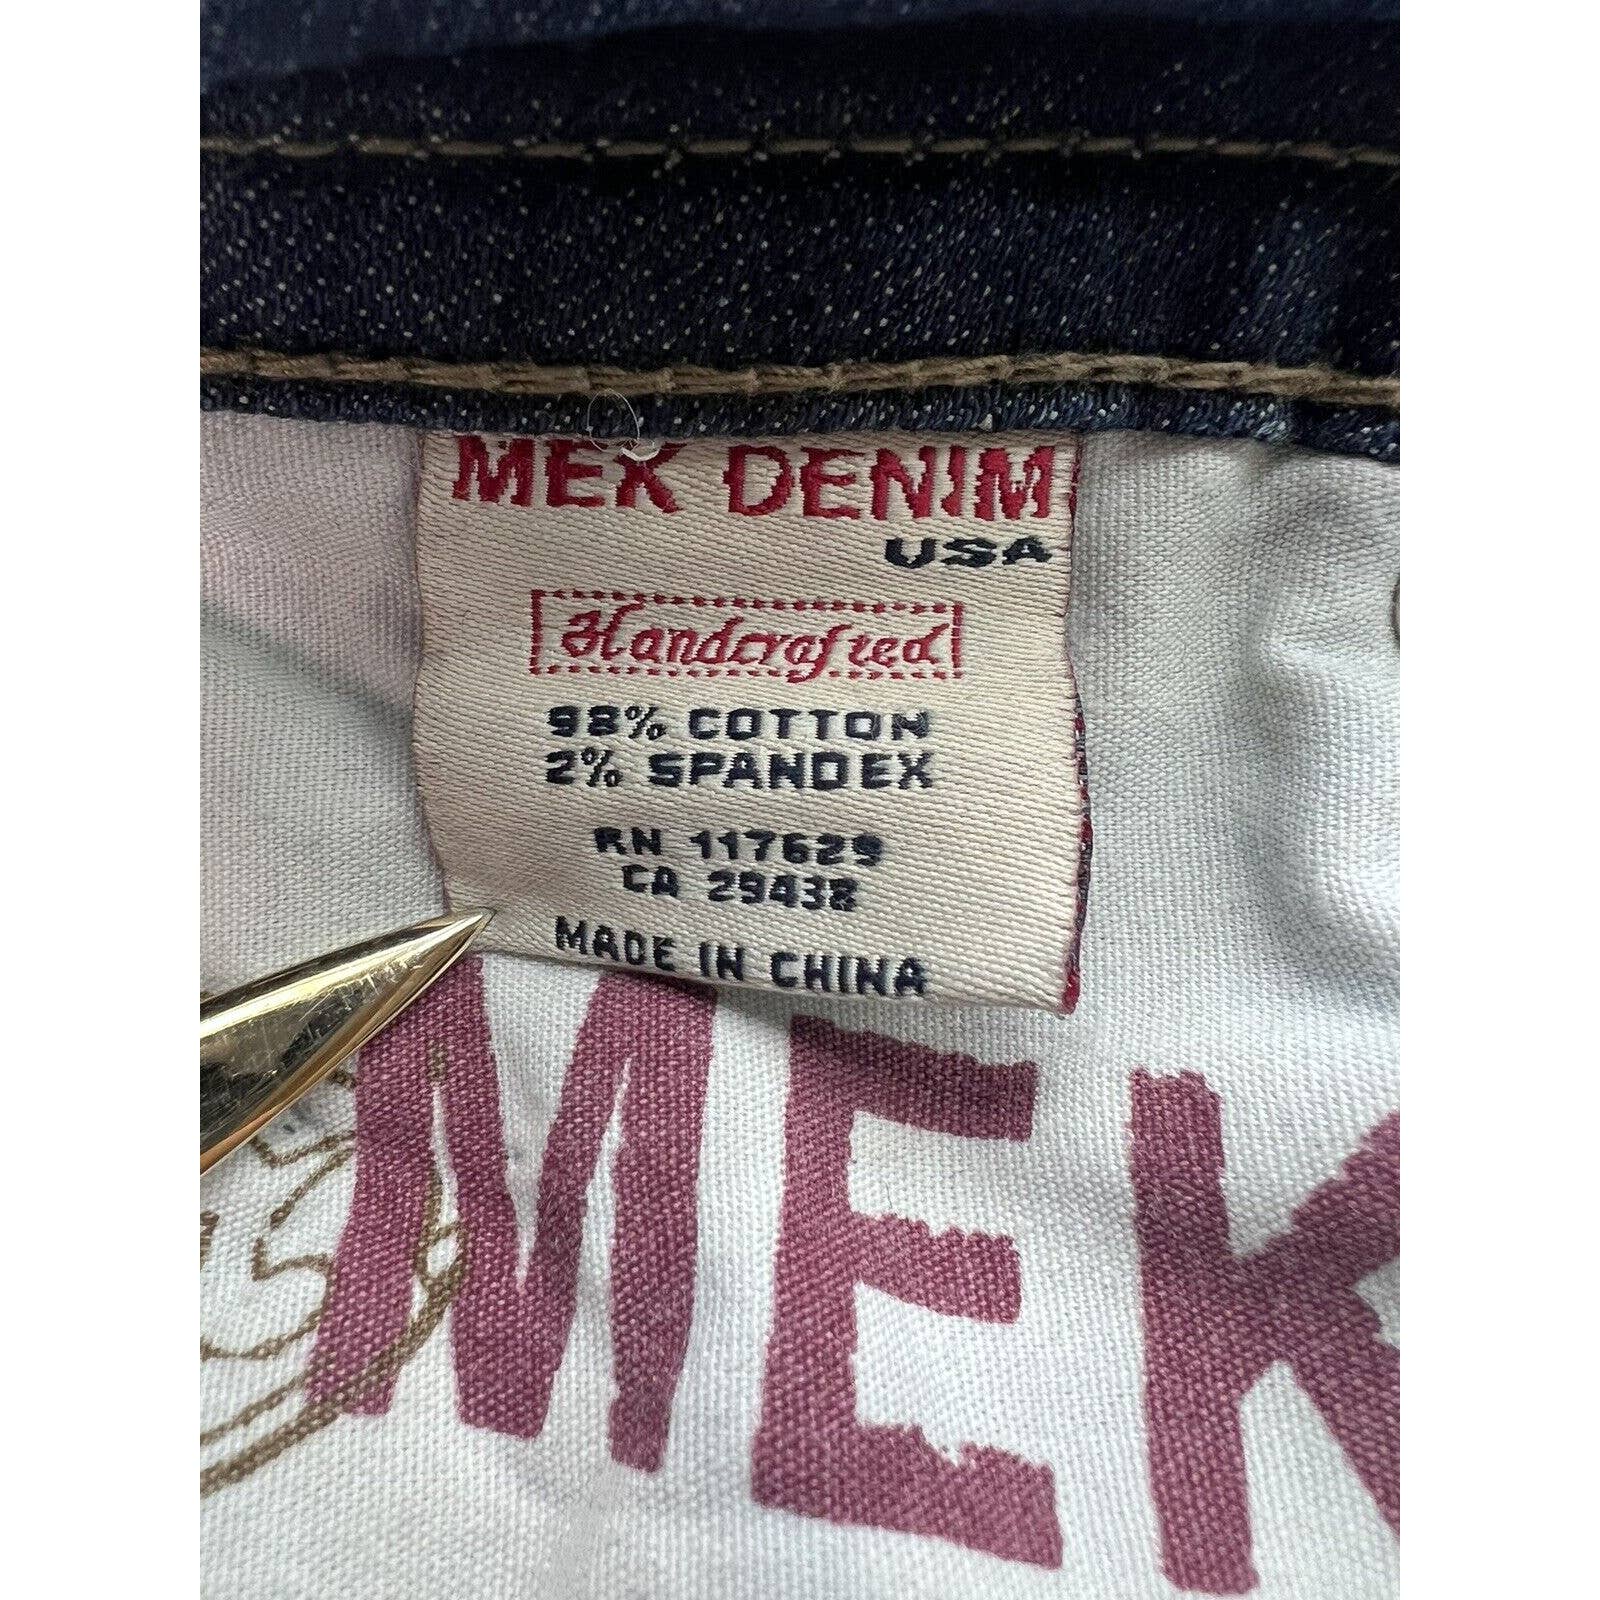 MEK Jeans Singapore Bootcut Women’s 29x34 Dark Wash Distressed Stretch Miss Me